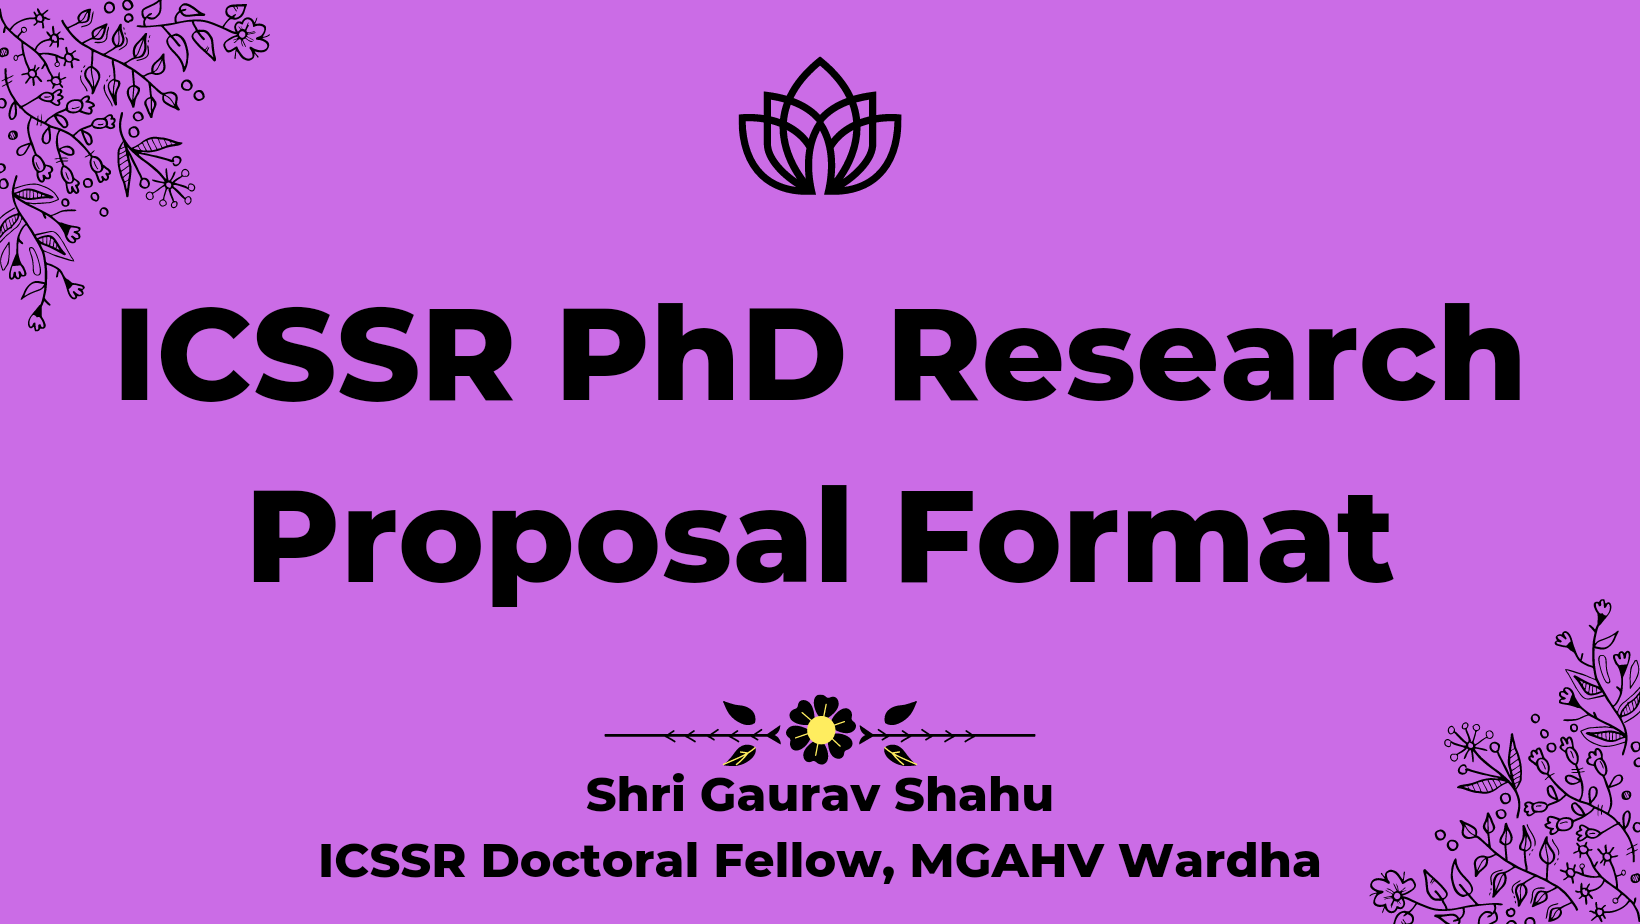 ICSSR PhD Research Proposal Format Shri Gaurav Shahu